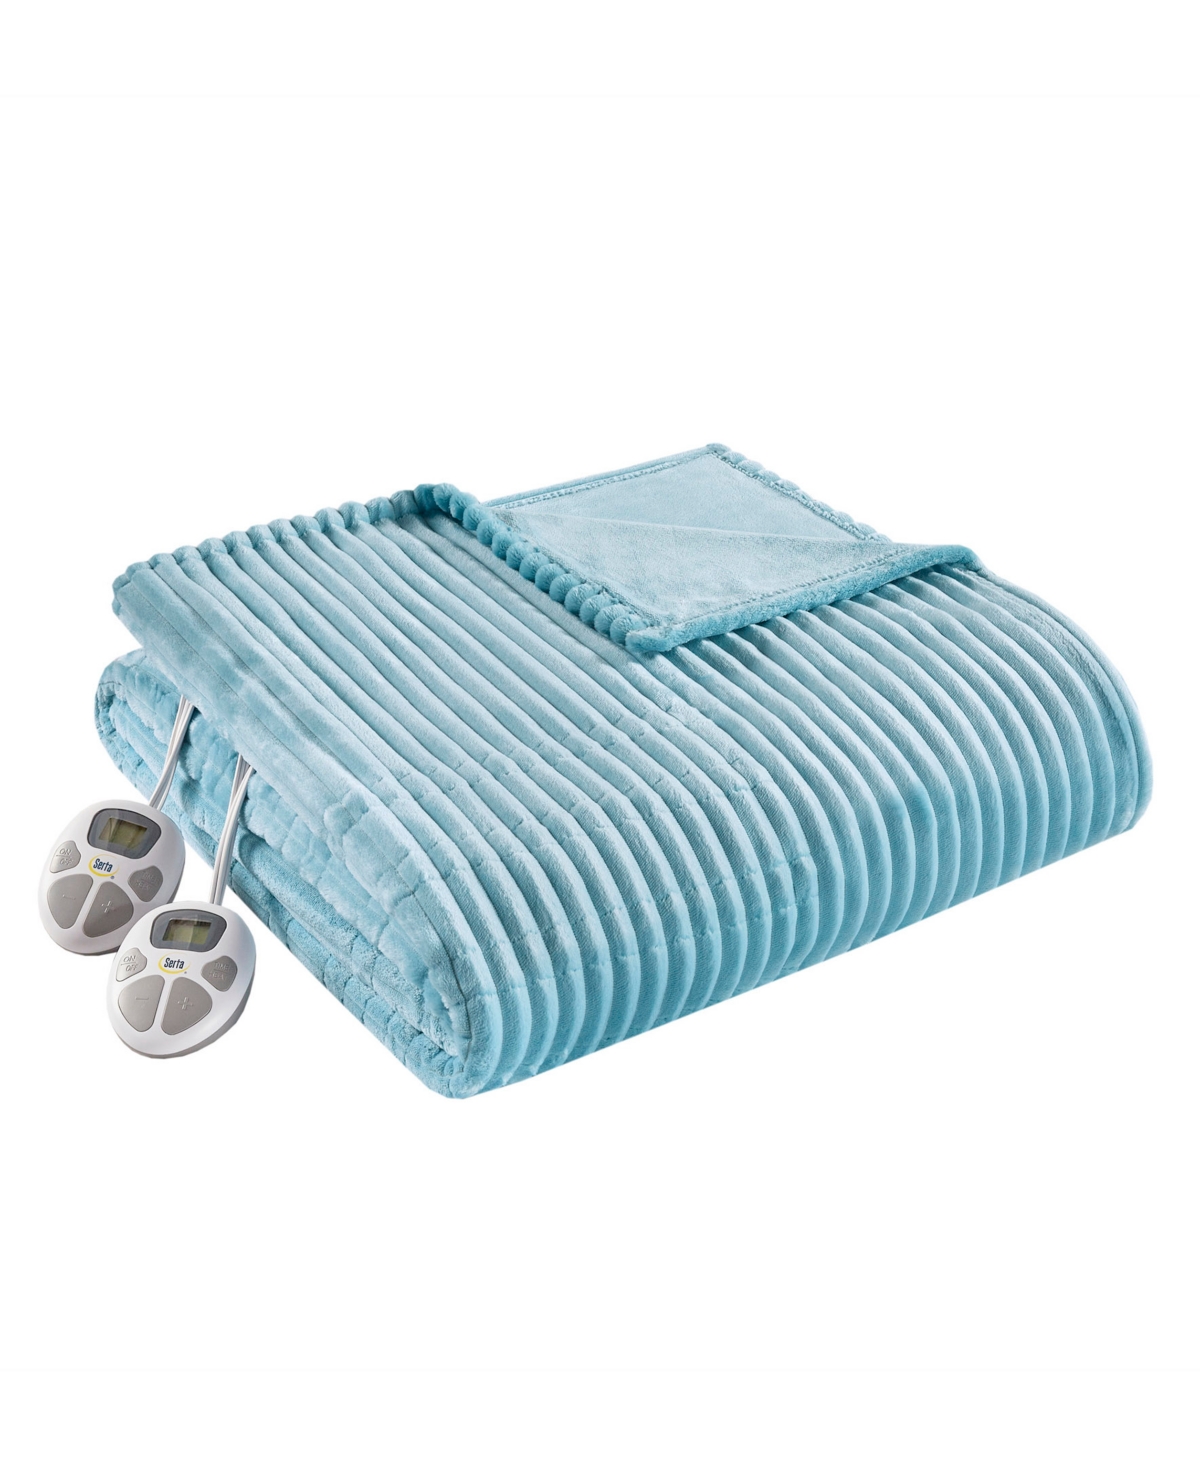 Serta Corded Plush Heated Blanket, Twin In Blue